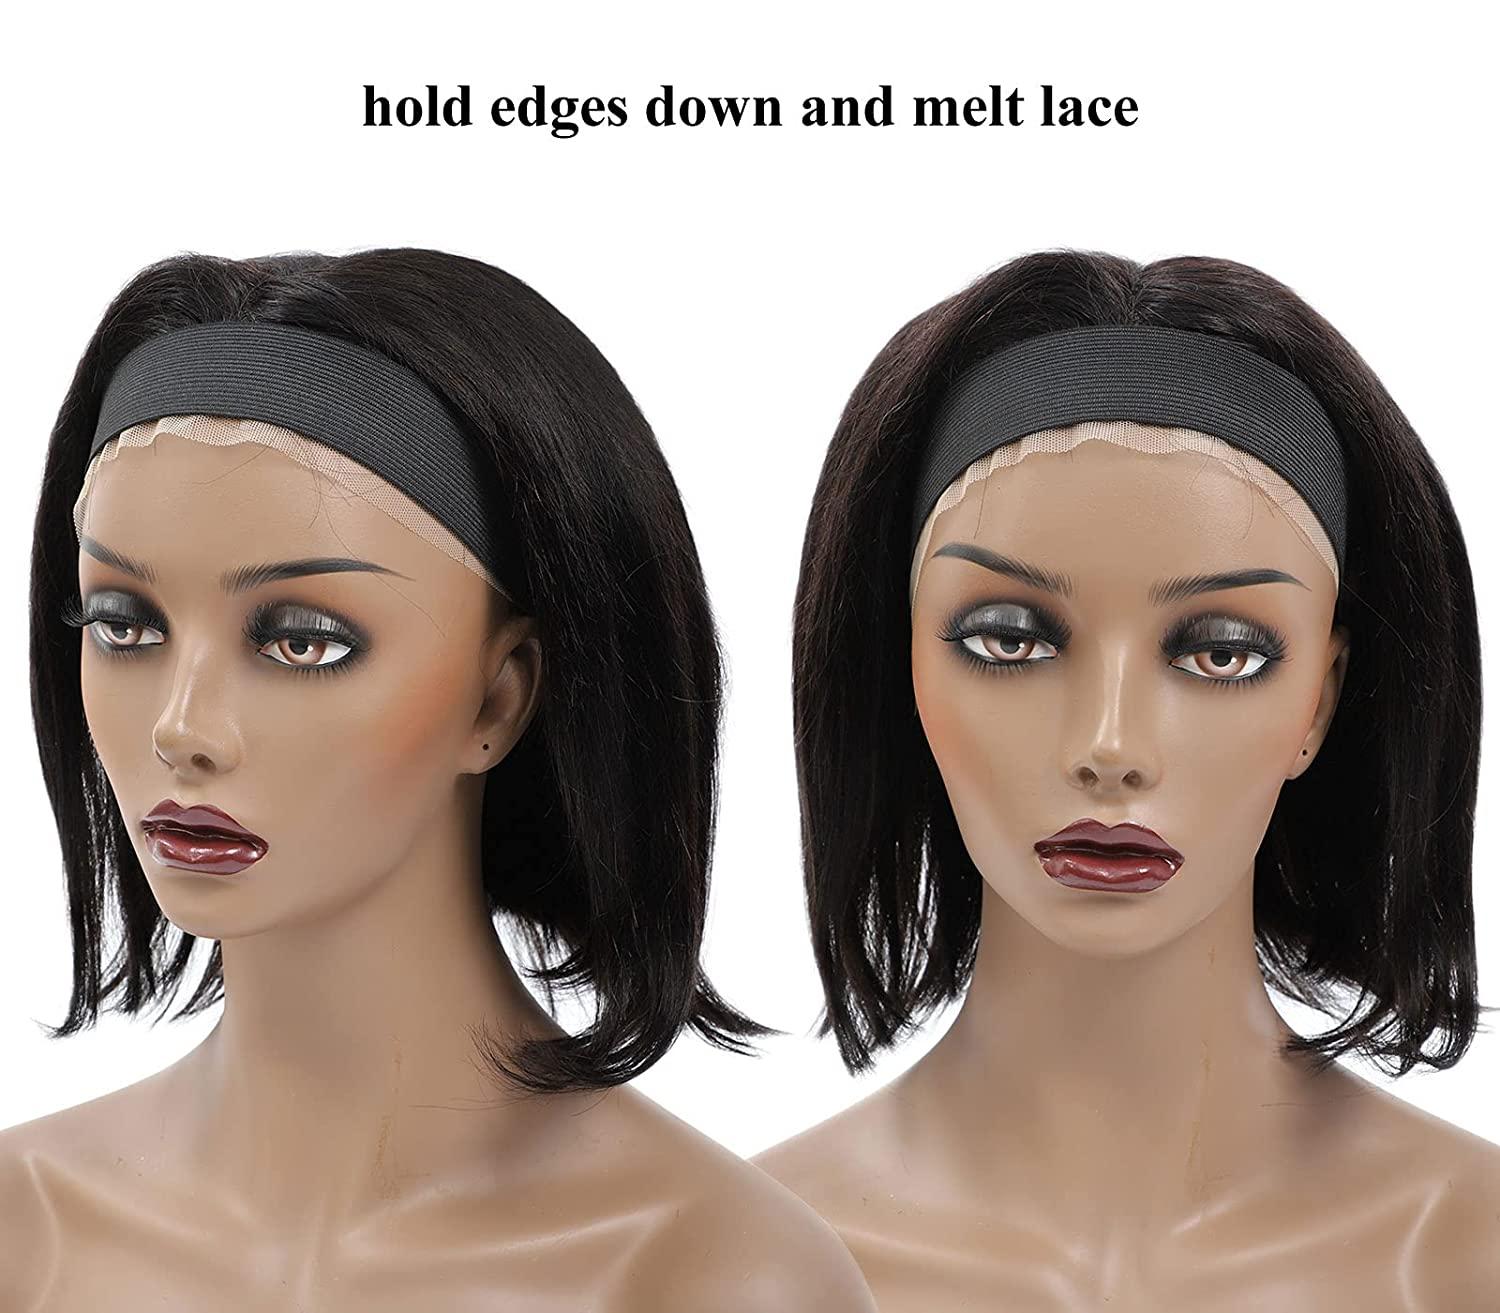 PIESOYRI 3PCS Elastic Band for Wigs Edges Lace Melting Bands Edge